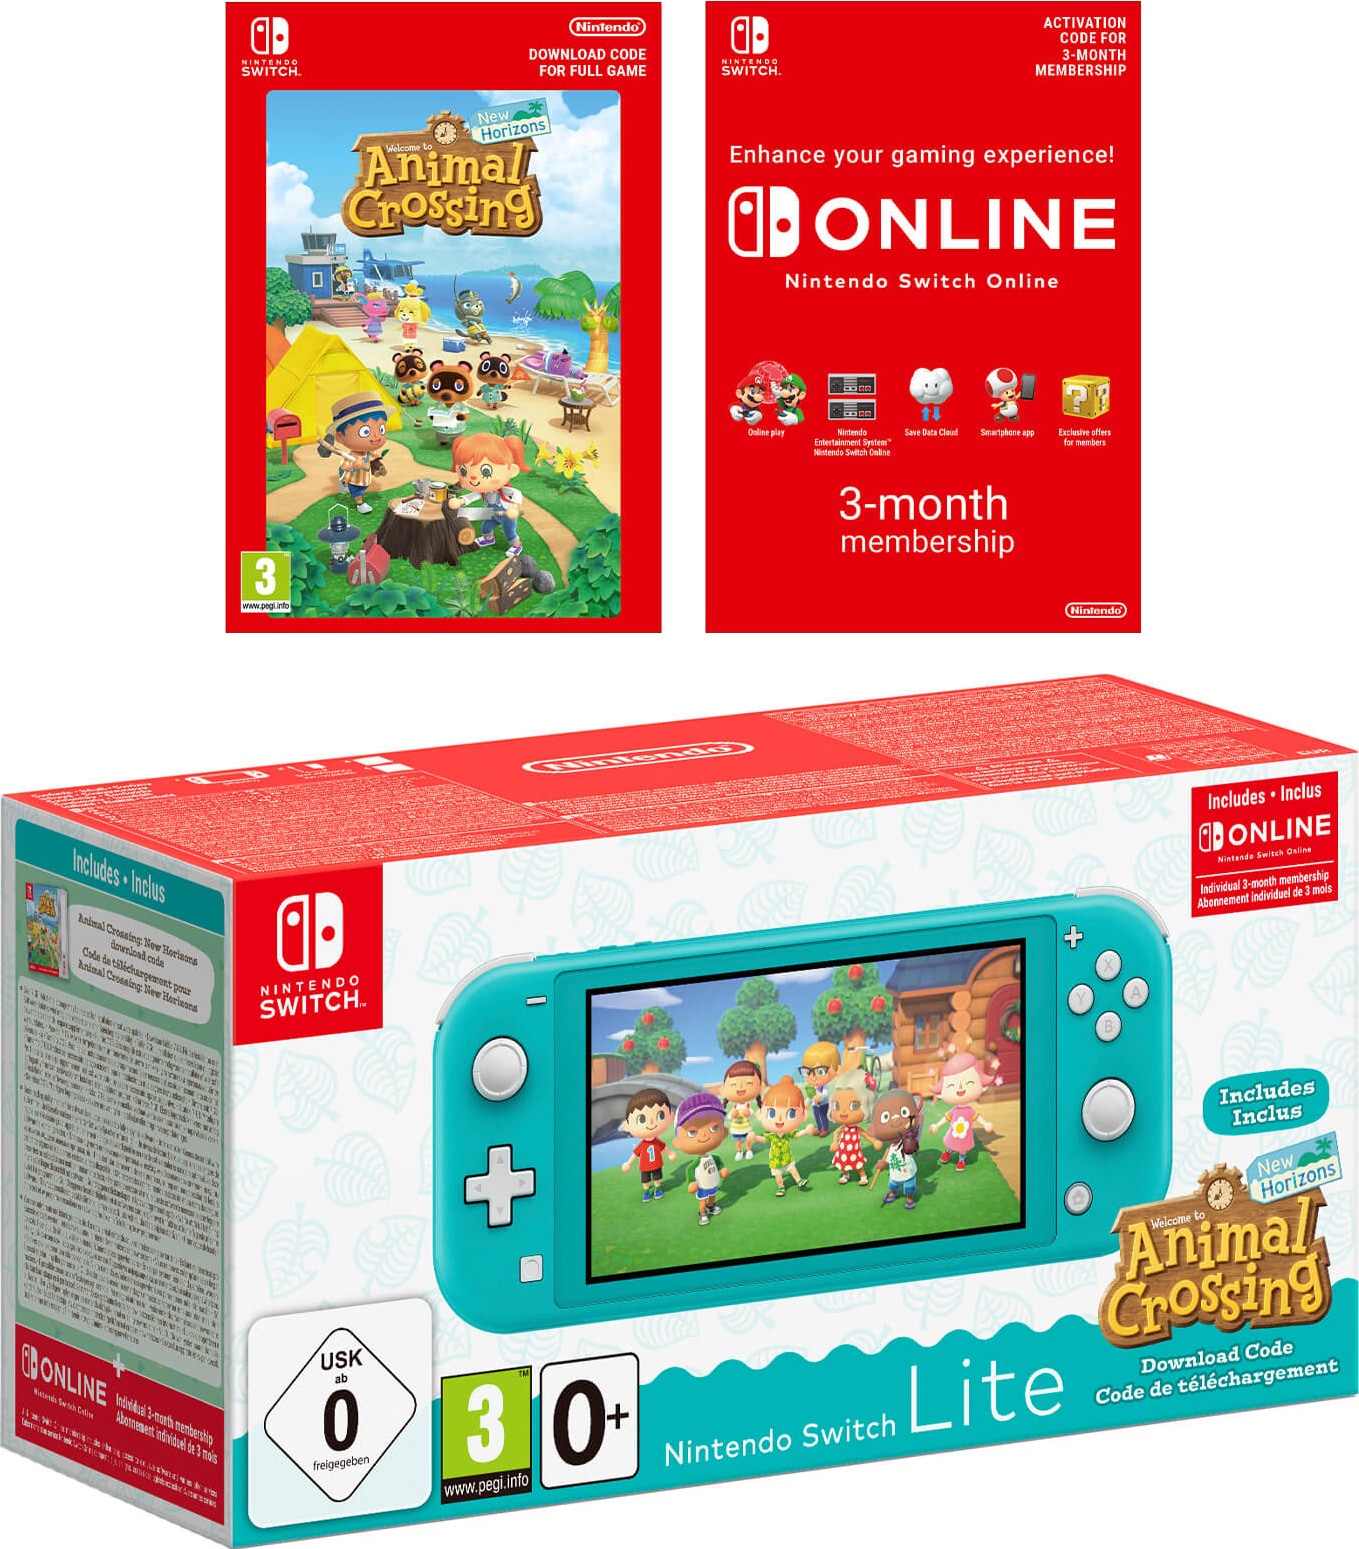 Nintendo Switch Lite EU spillkonsoll med Animal Crossing (turkis) - Elkjøp